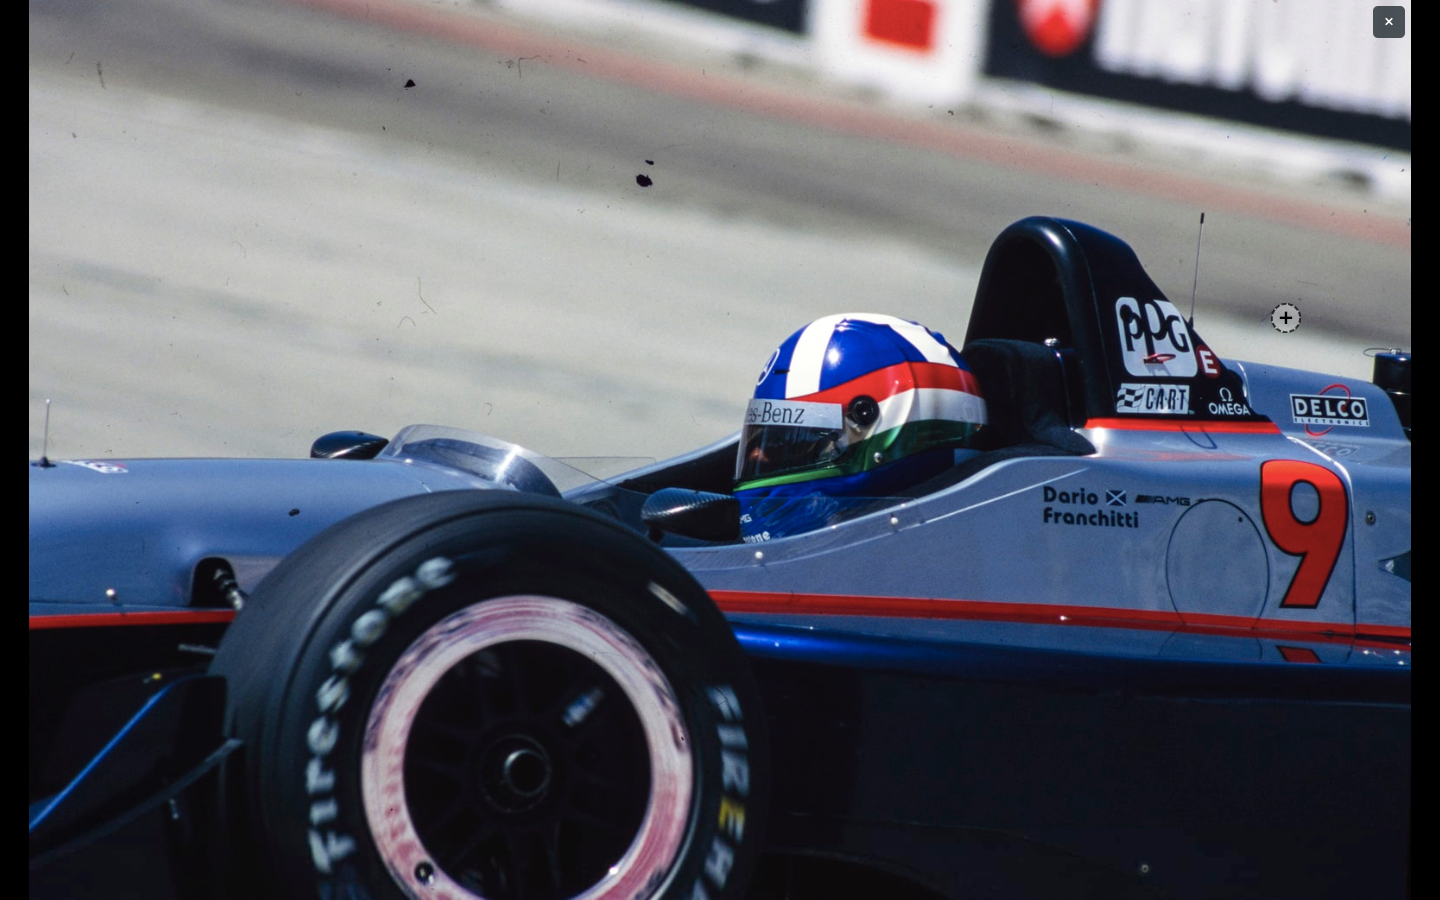 1997 Dario Franchitti Signed Toronto Race Used Hogan Racing CART Visor